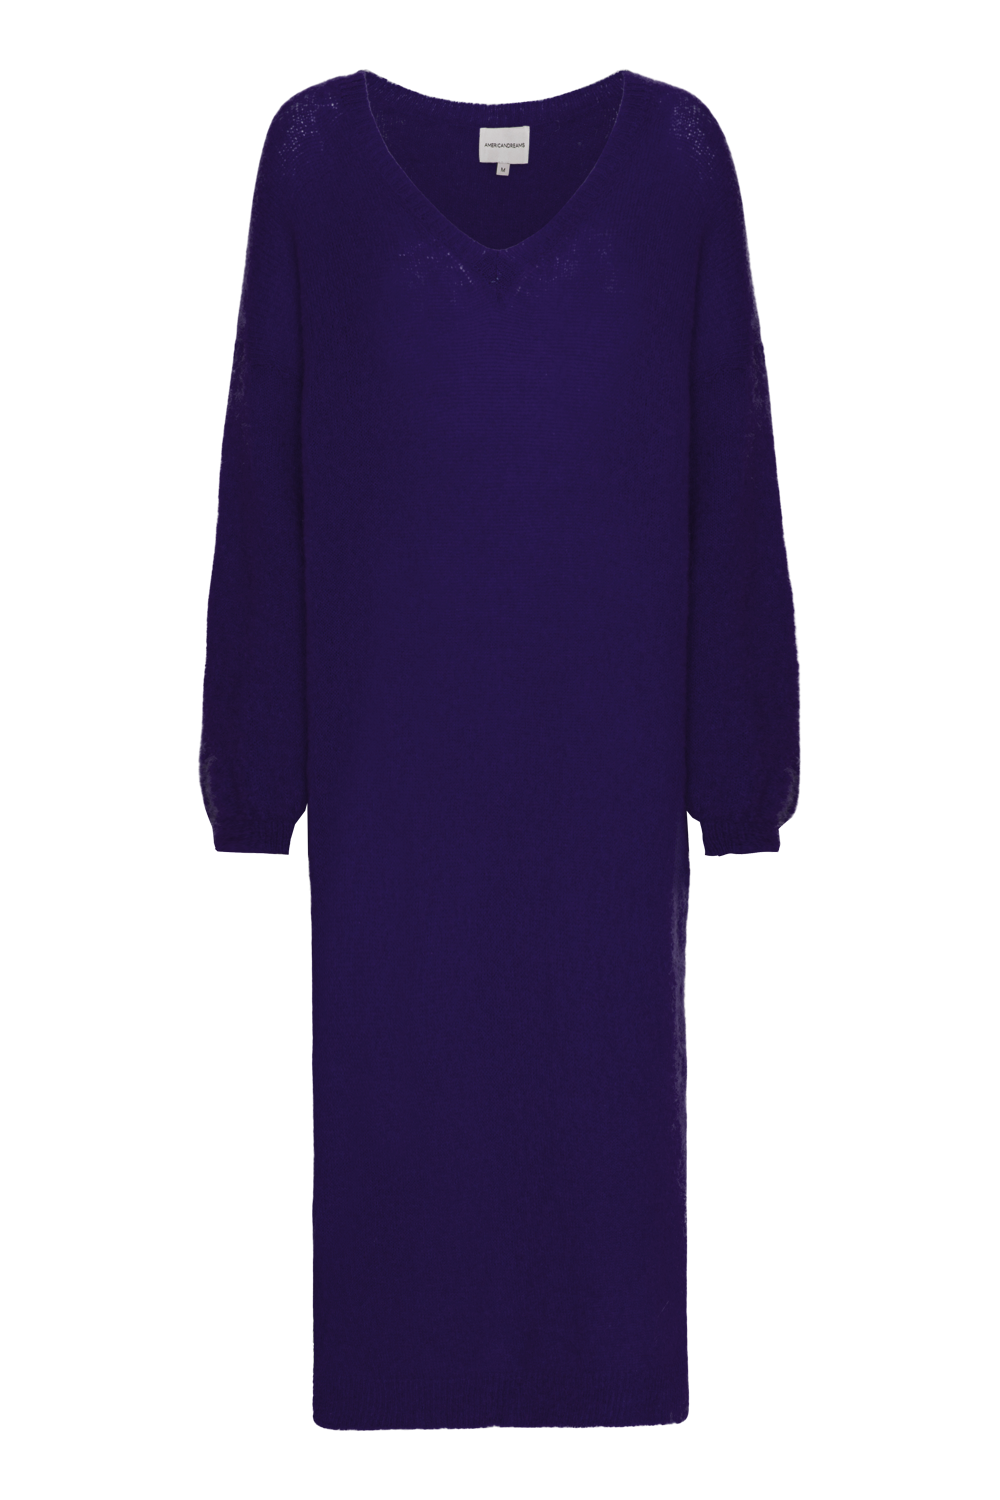 Silja Dress Violet - Sample